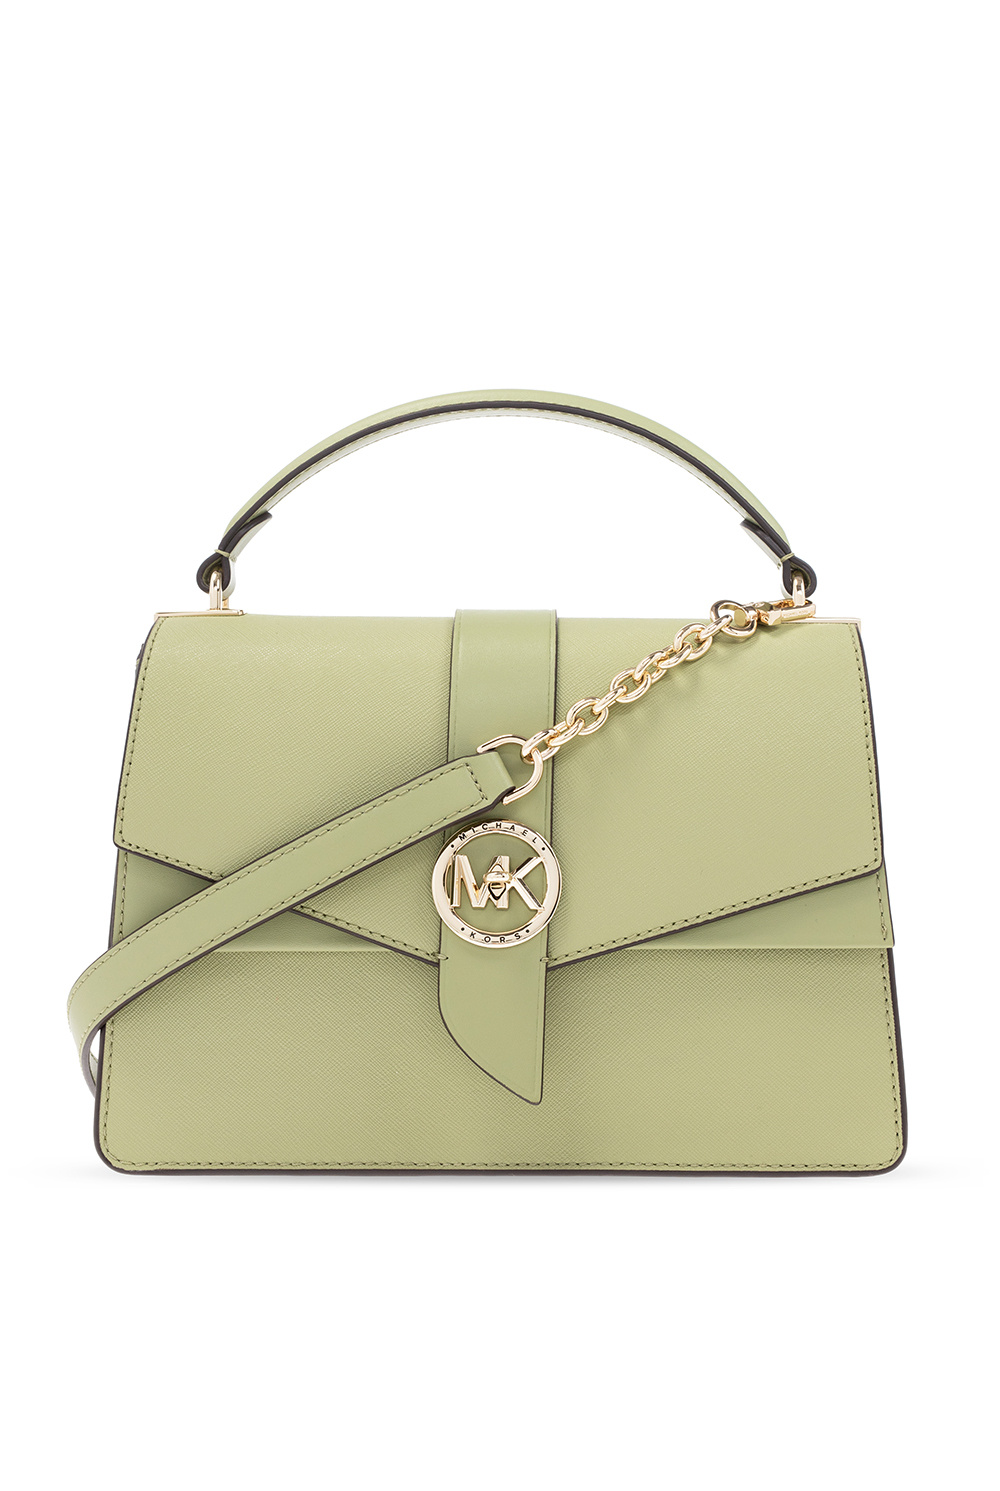 Michael Kors Olive Green Ladies Hendrix Medium Leather Envelope Bag